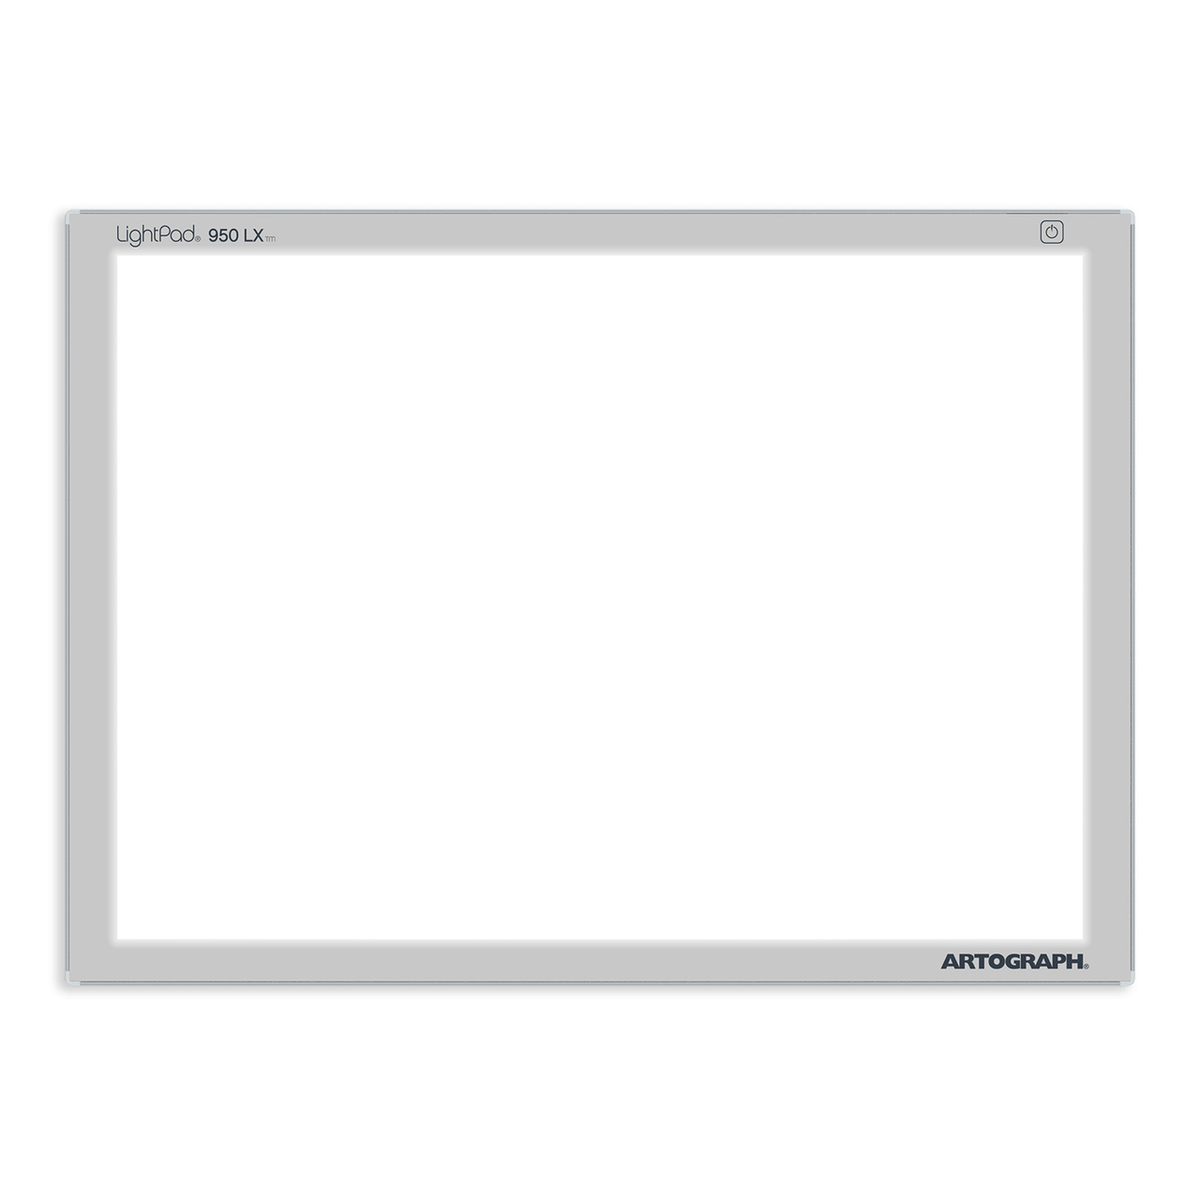 Artograph LightPad 950LX 17x24